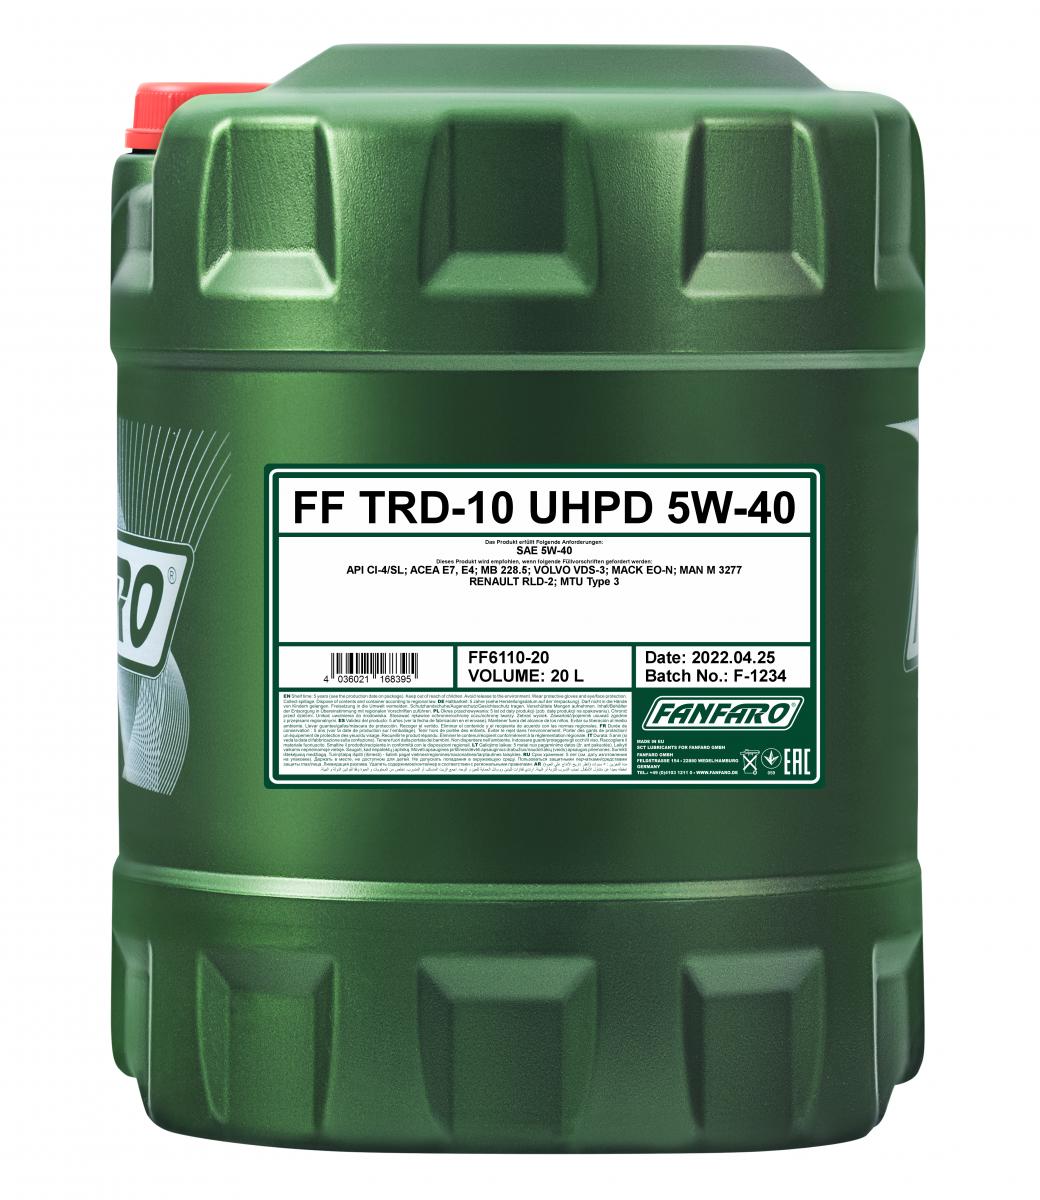 TRD-10 UHPD 5W-40